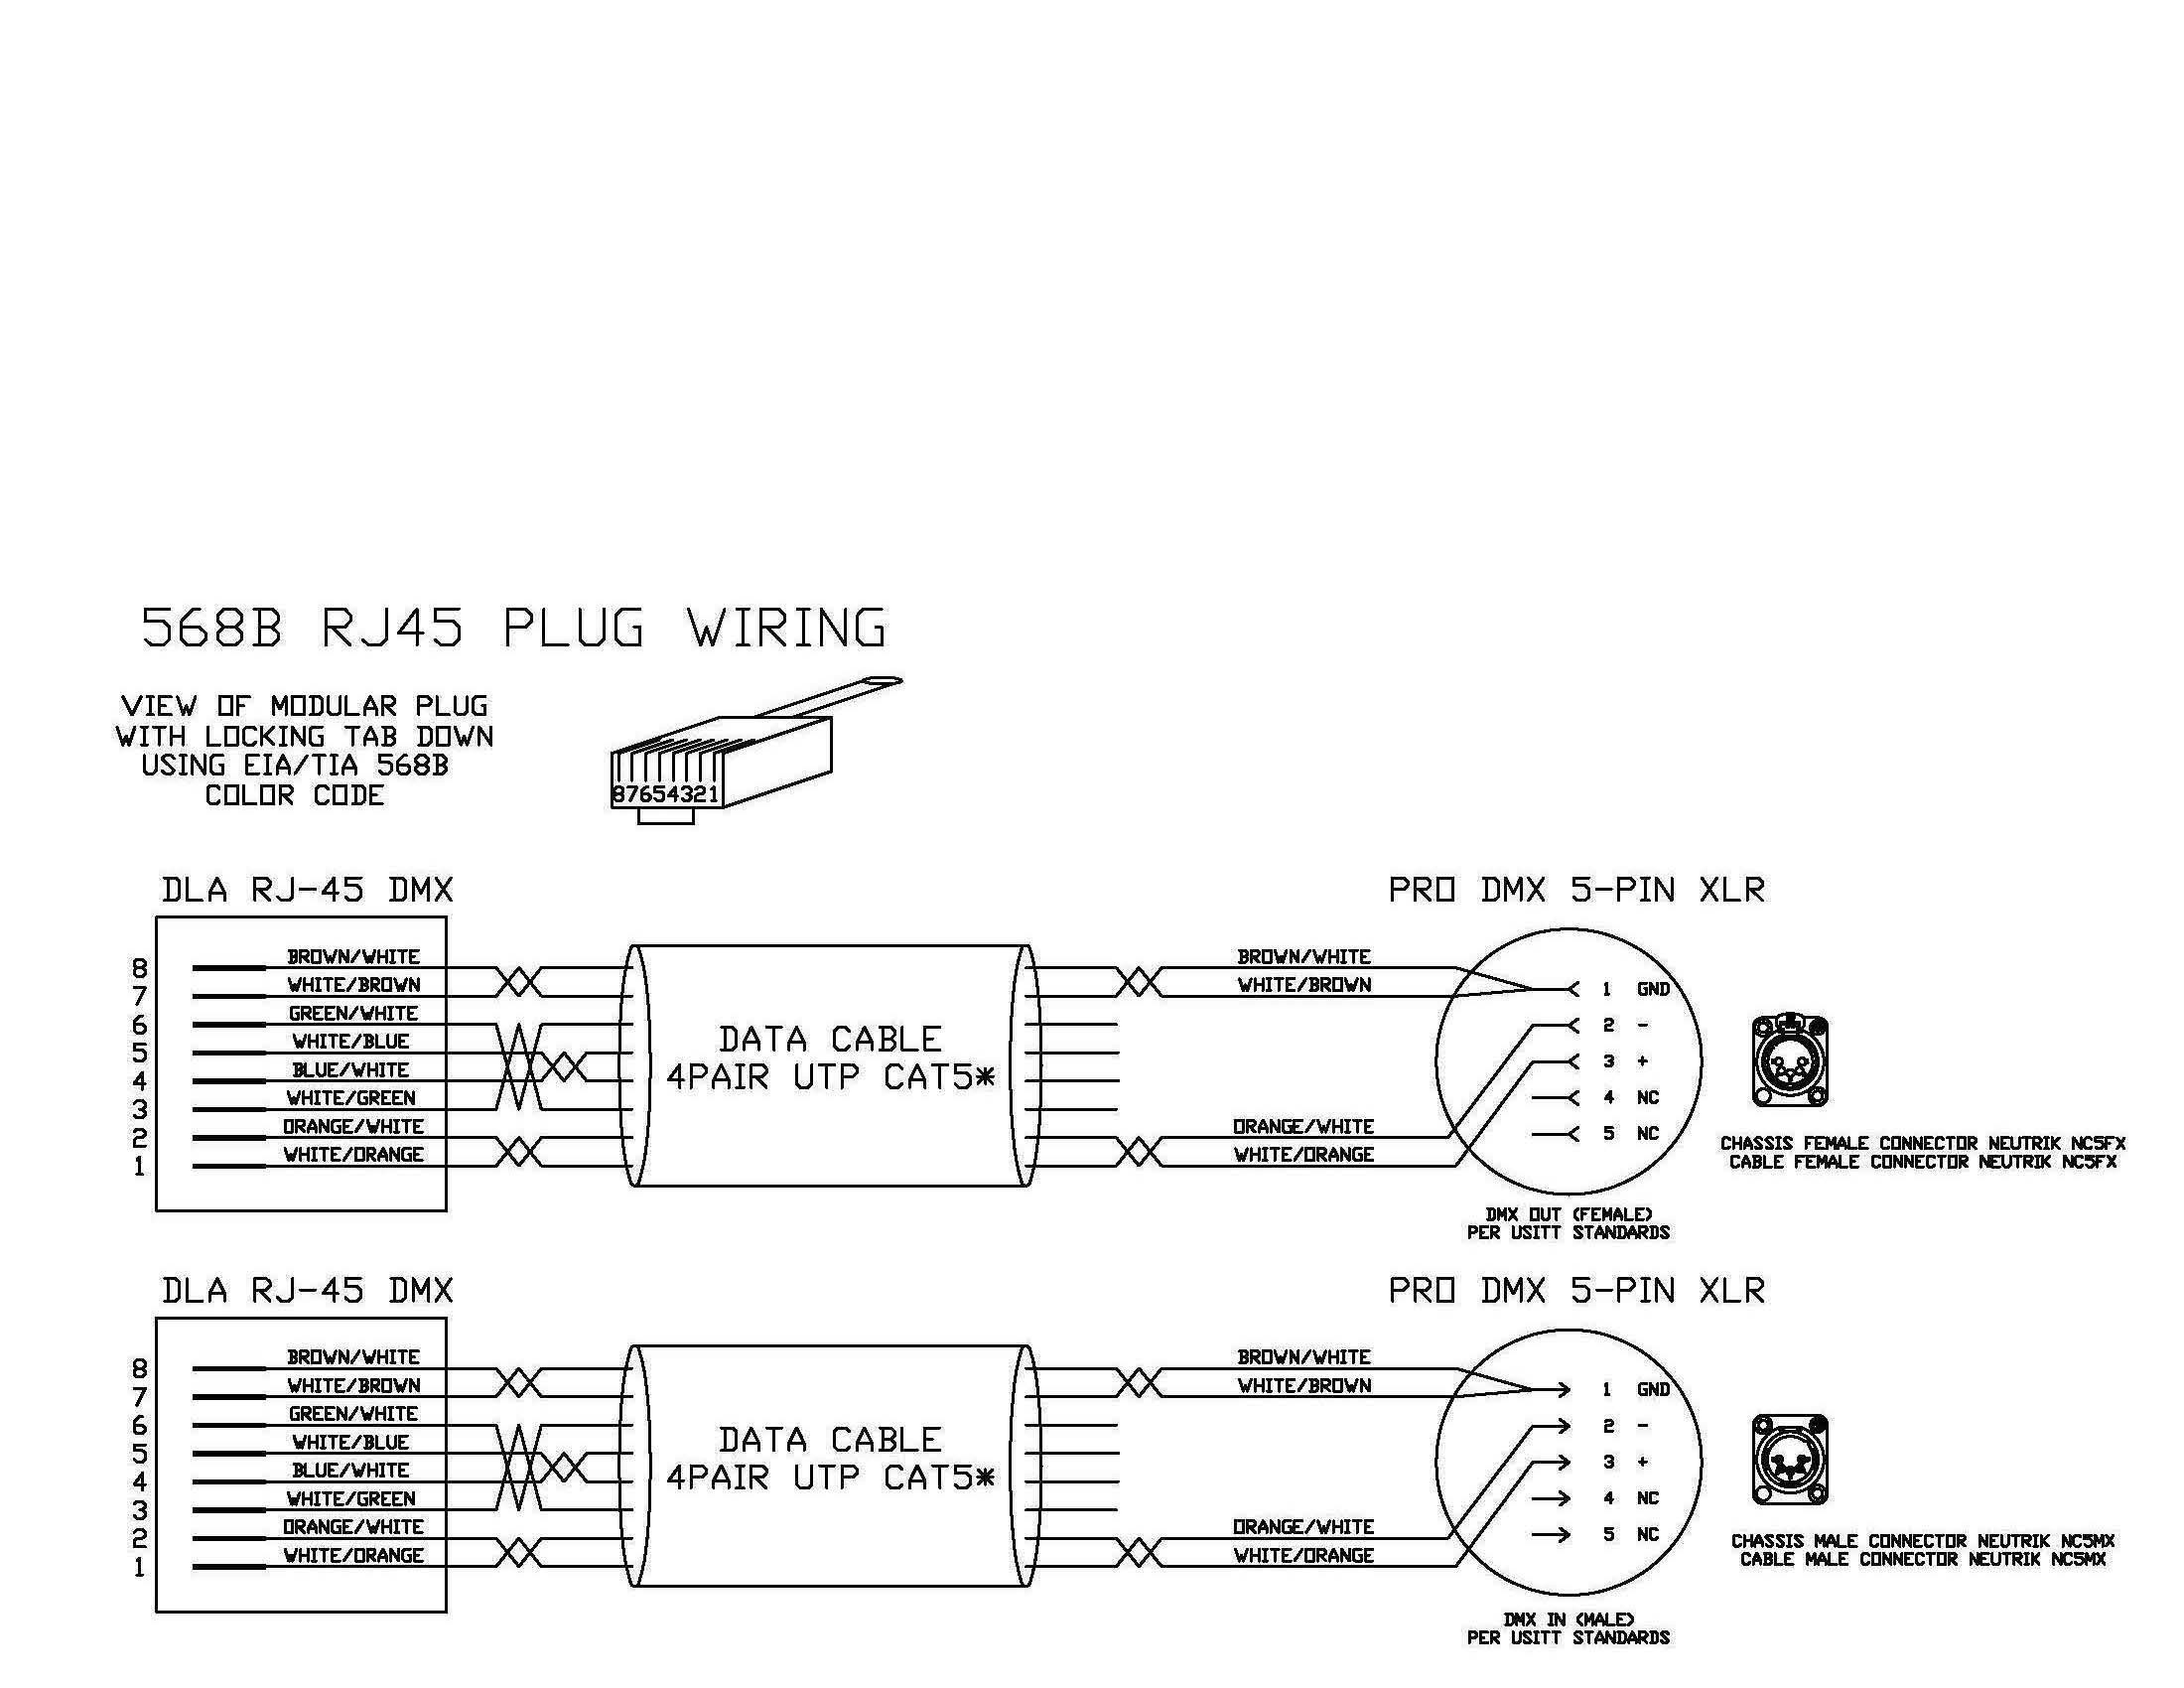 Wiring Xlr Connectors Diagram New Xlr to Rj45 Wiring Diagram Xlr Electrical Wiring Diagrams